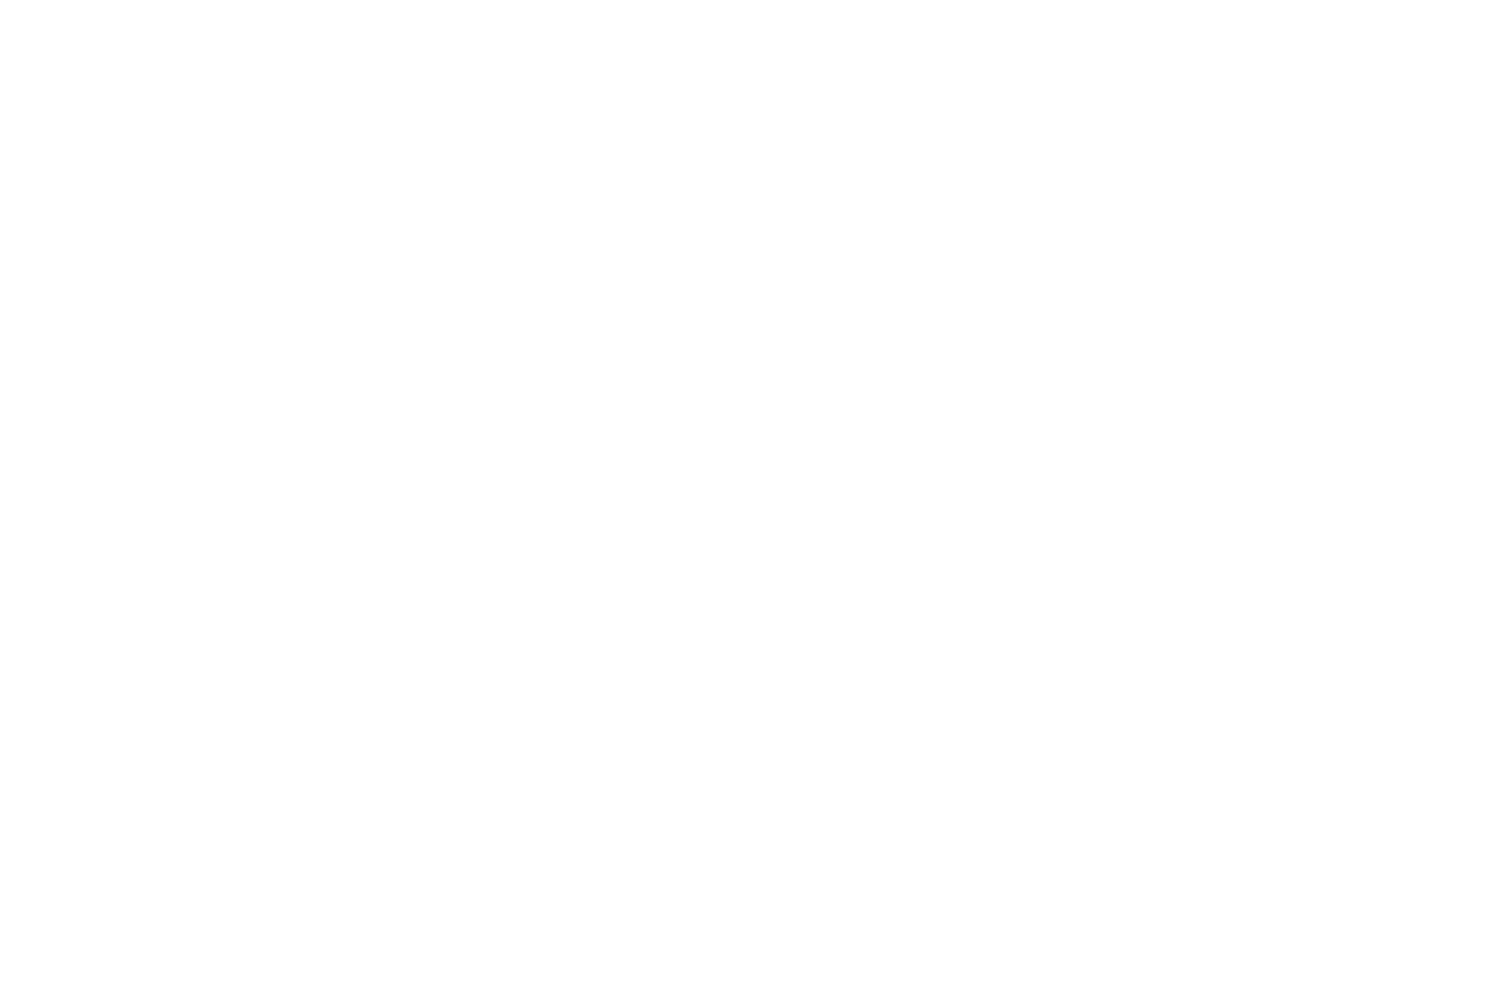 Sue Oxley Photography